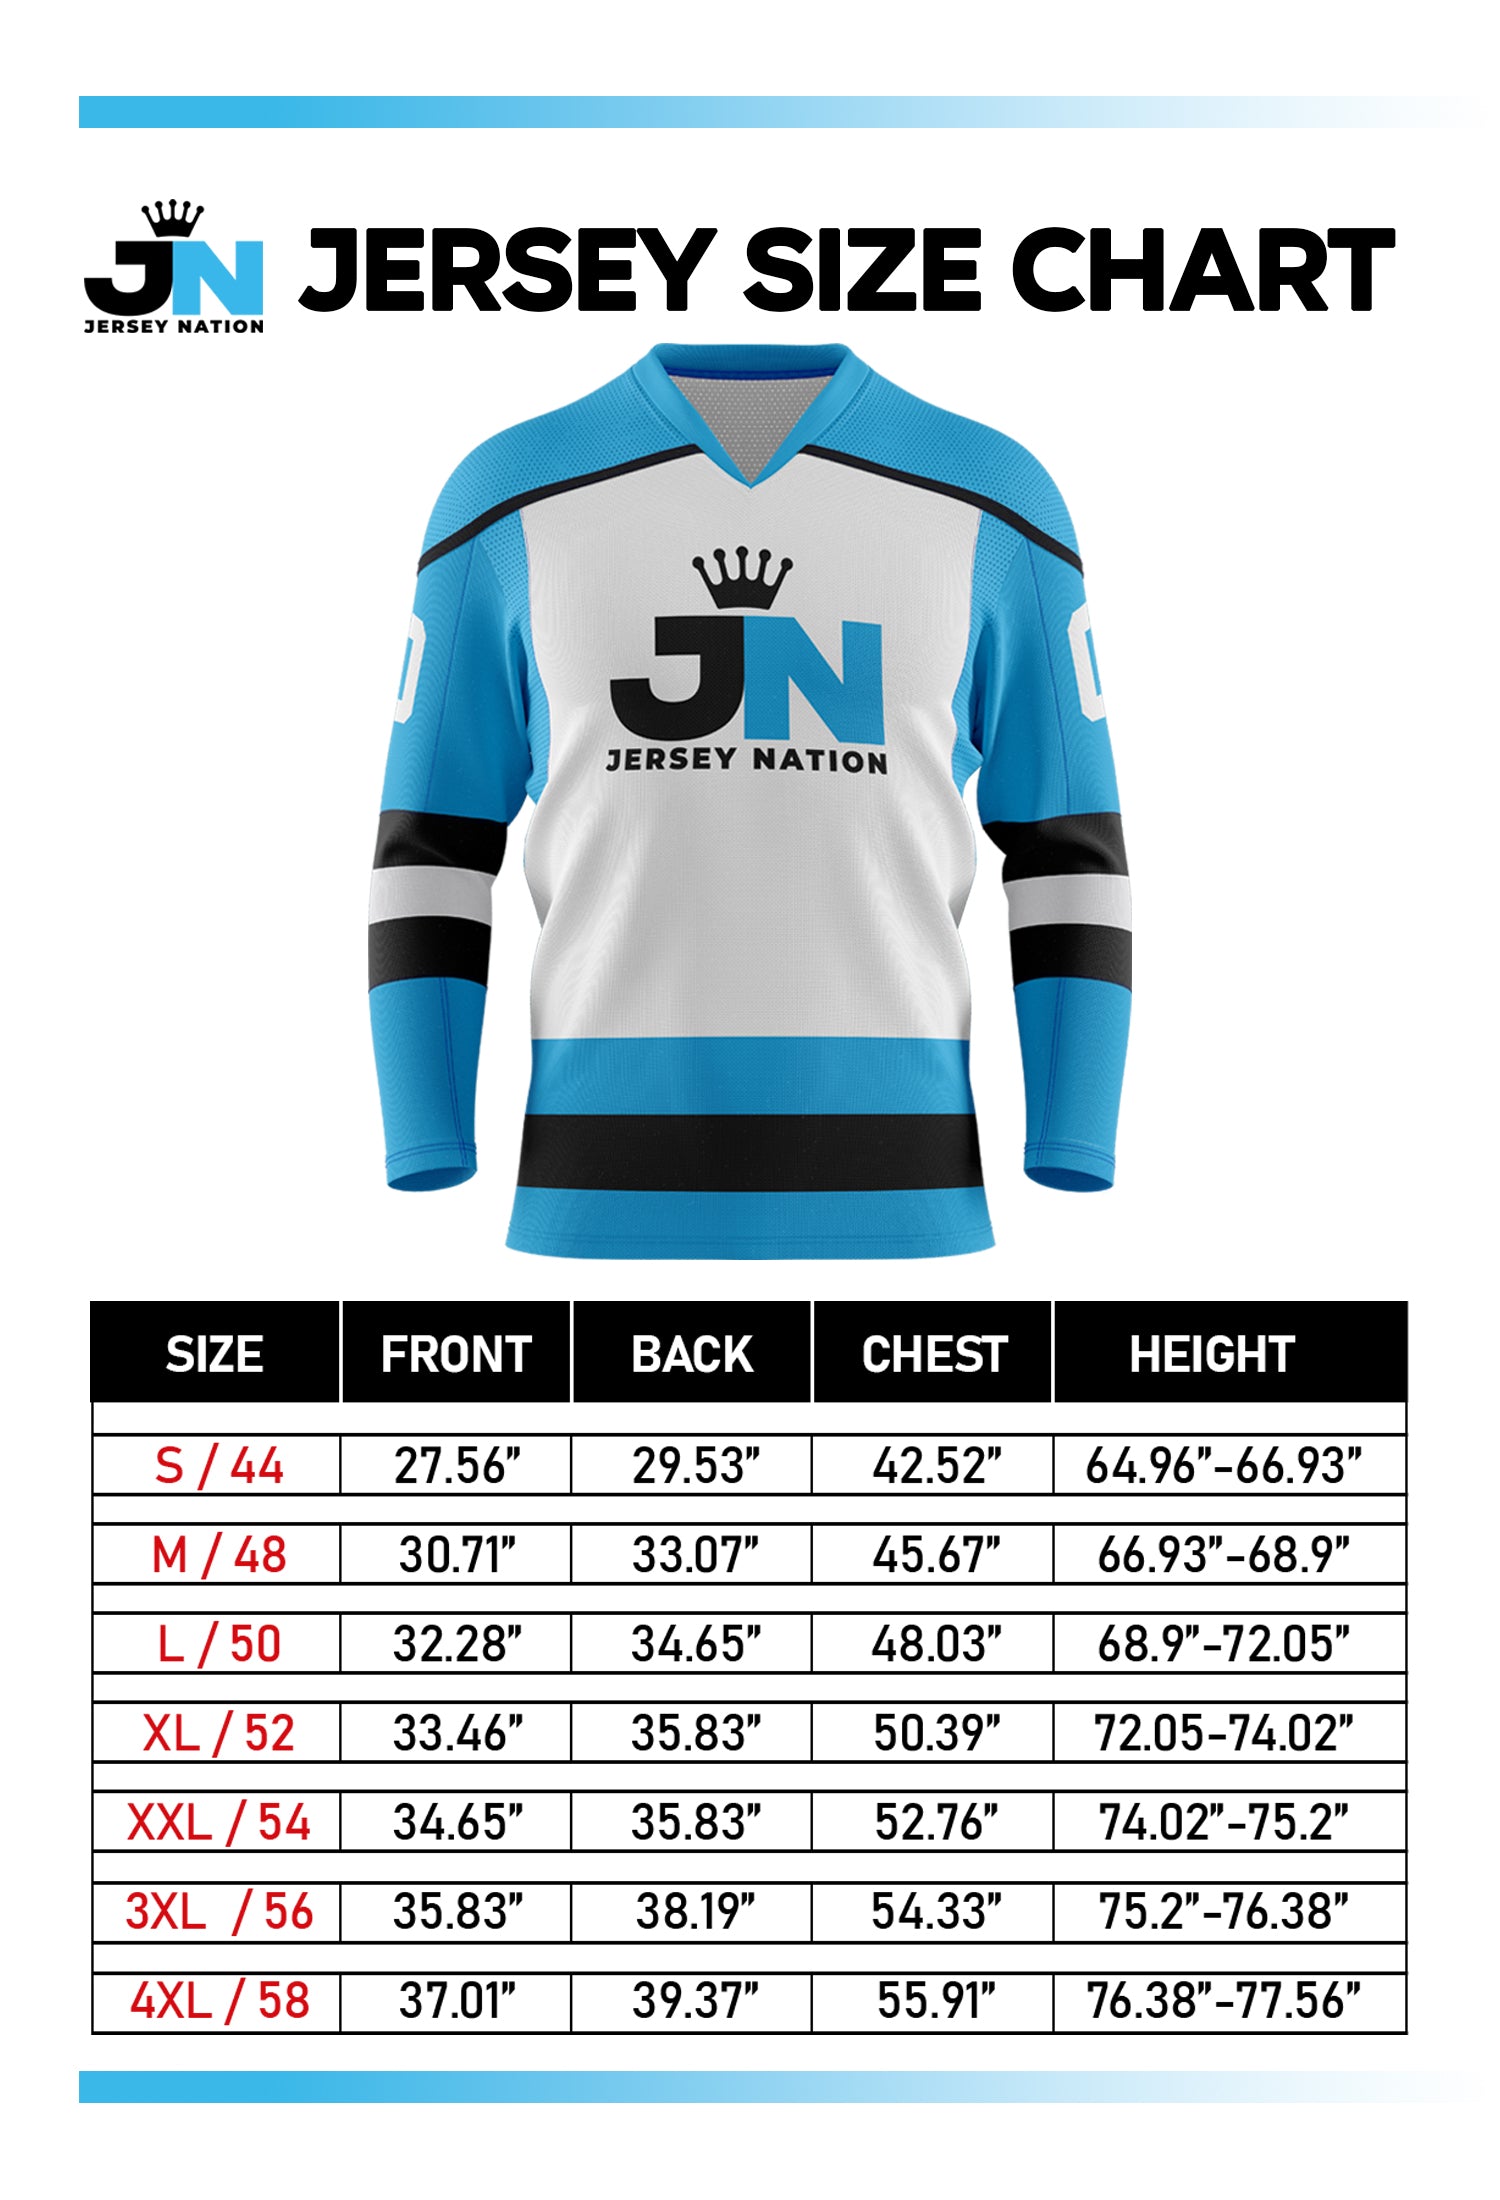 Buy Now - Halifax Highlanders T-Shirt by Slingshot Hockey